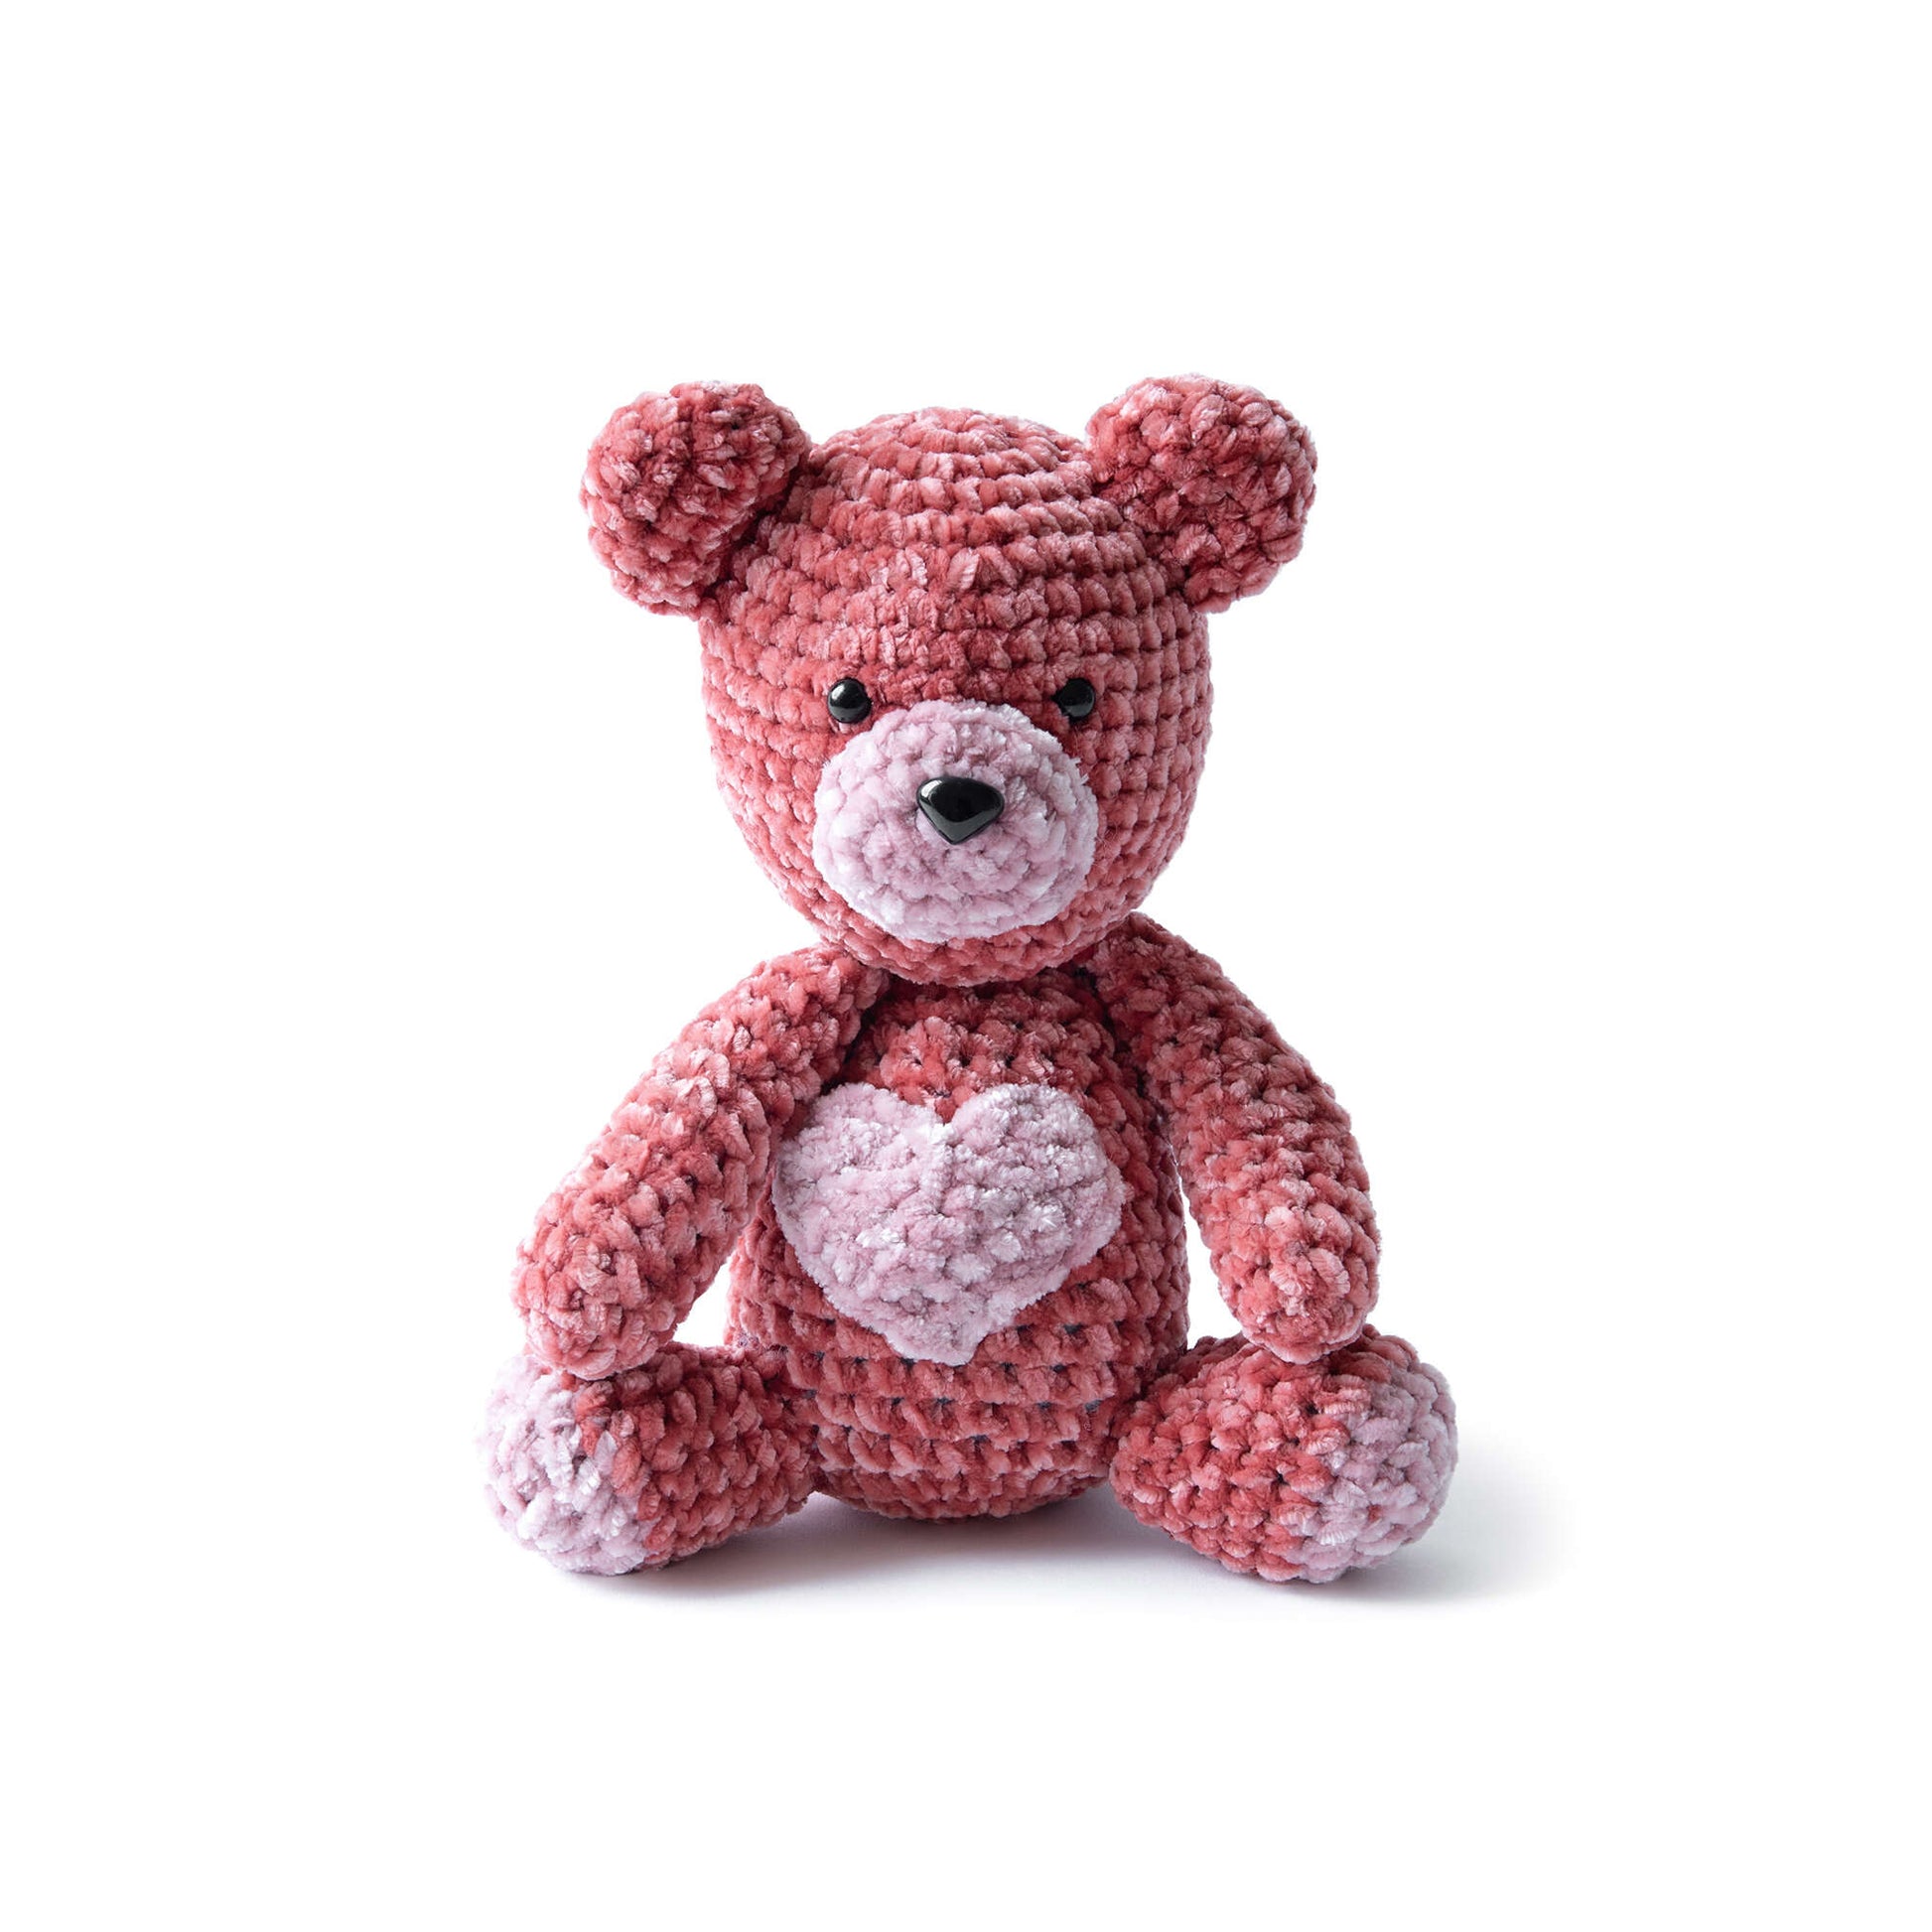 Lot 3 NEW Premier Just Yarn Plush Brown & Burgundy Crochet Knitting Teddy  Bear